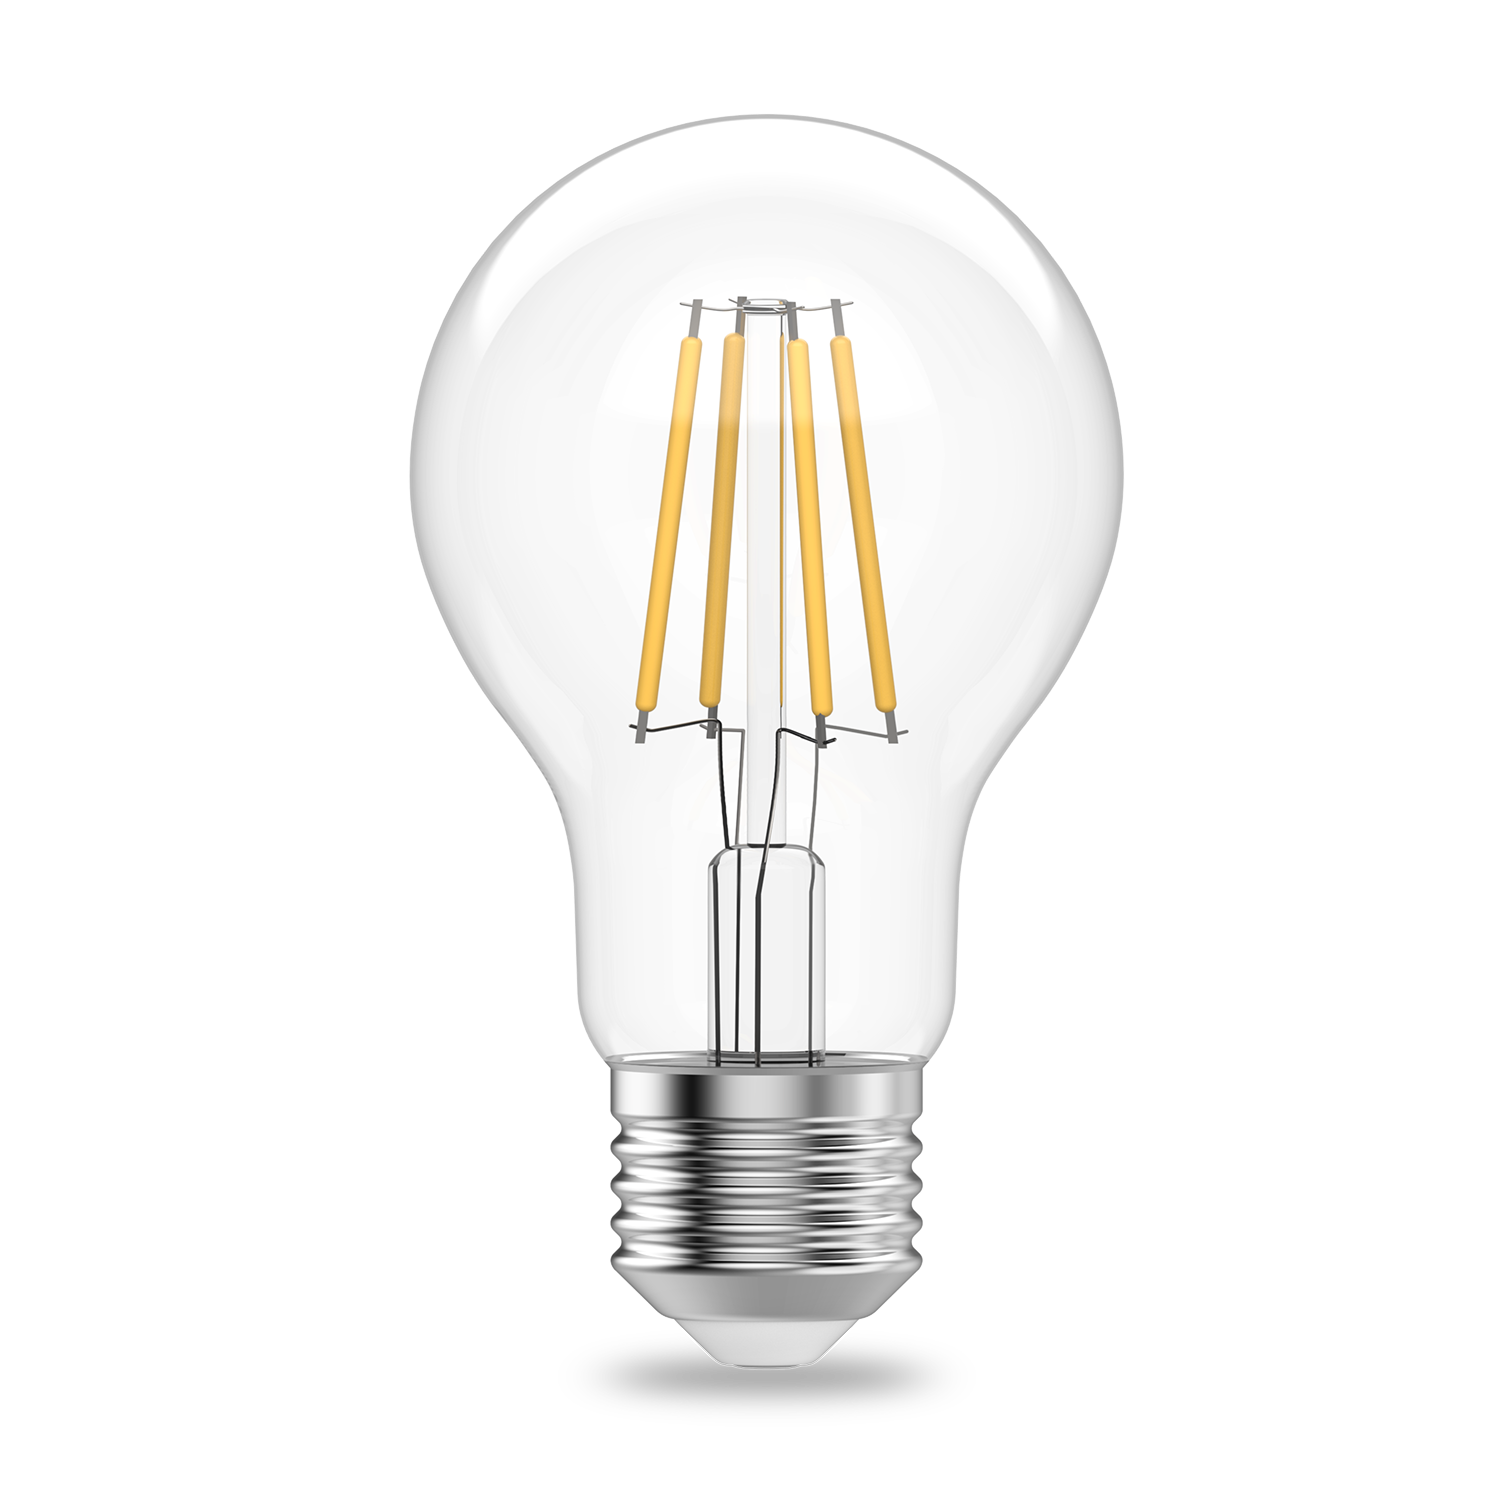 Лампа Gauss Filament Elementary А60 11W 910lm 2700К Е27 LED 1/10/50